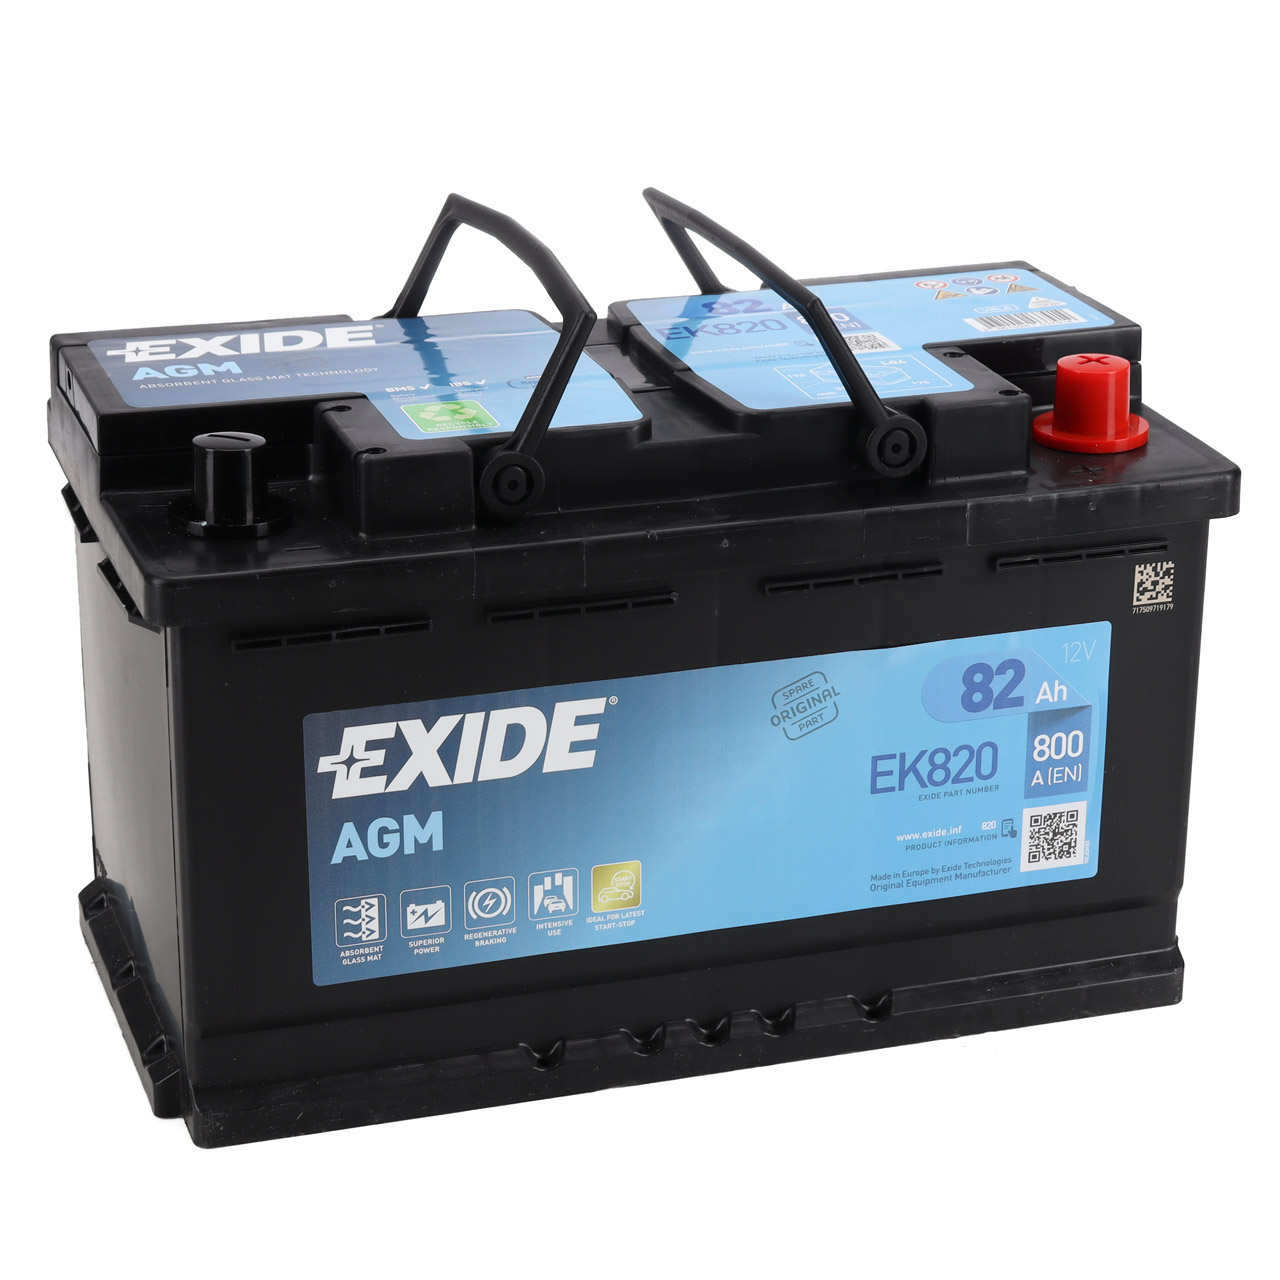 EXIDE Starterbatterien / Autobatterien - EK820 